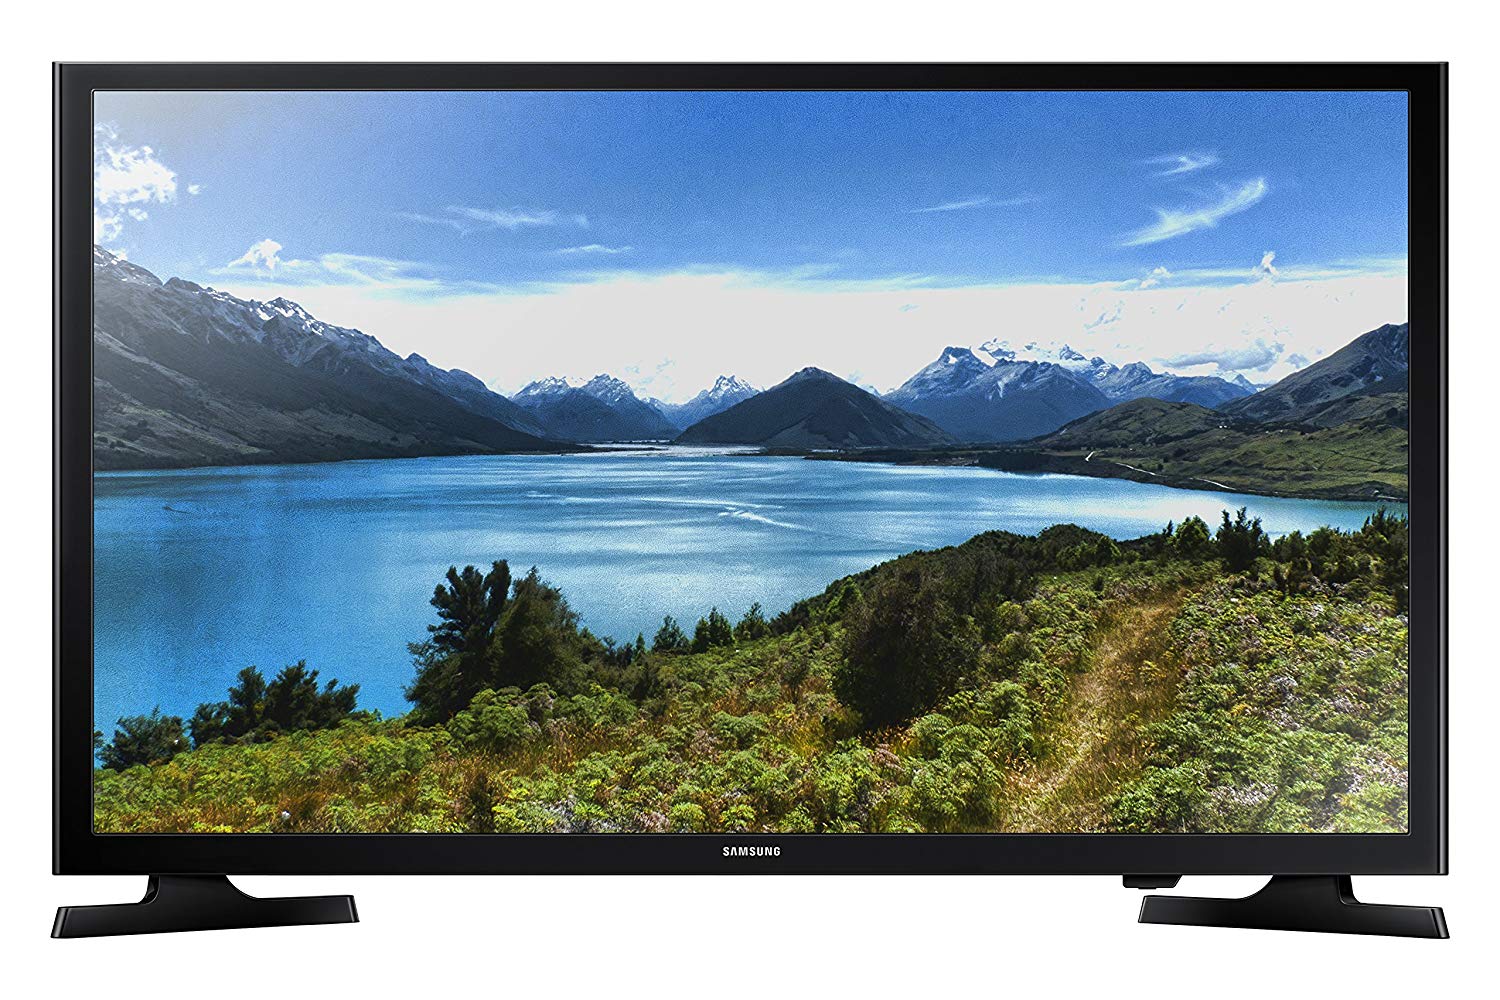 Samsung 32-Inch 720p LED TV